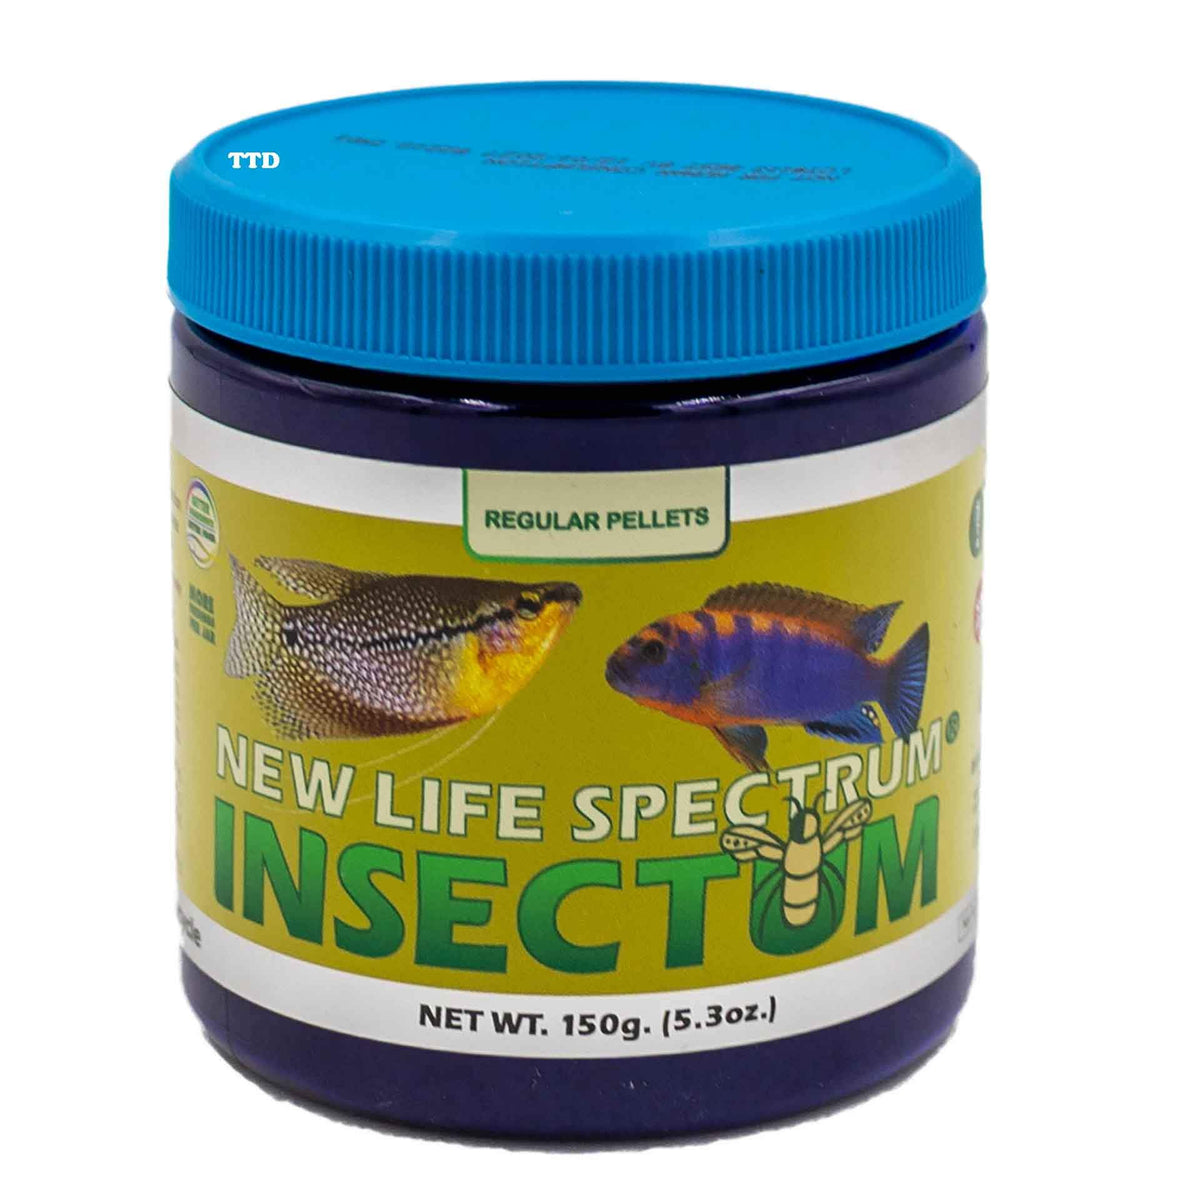 New Life Spectrum Insectum Regular 150g - Sinking Pellet 1-1.5mm